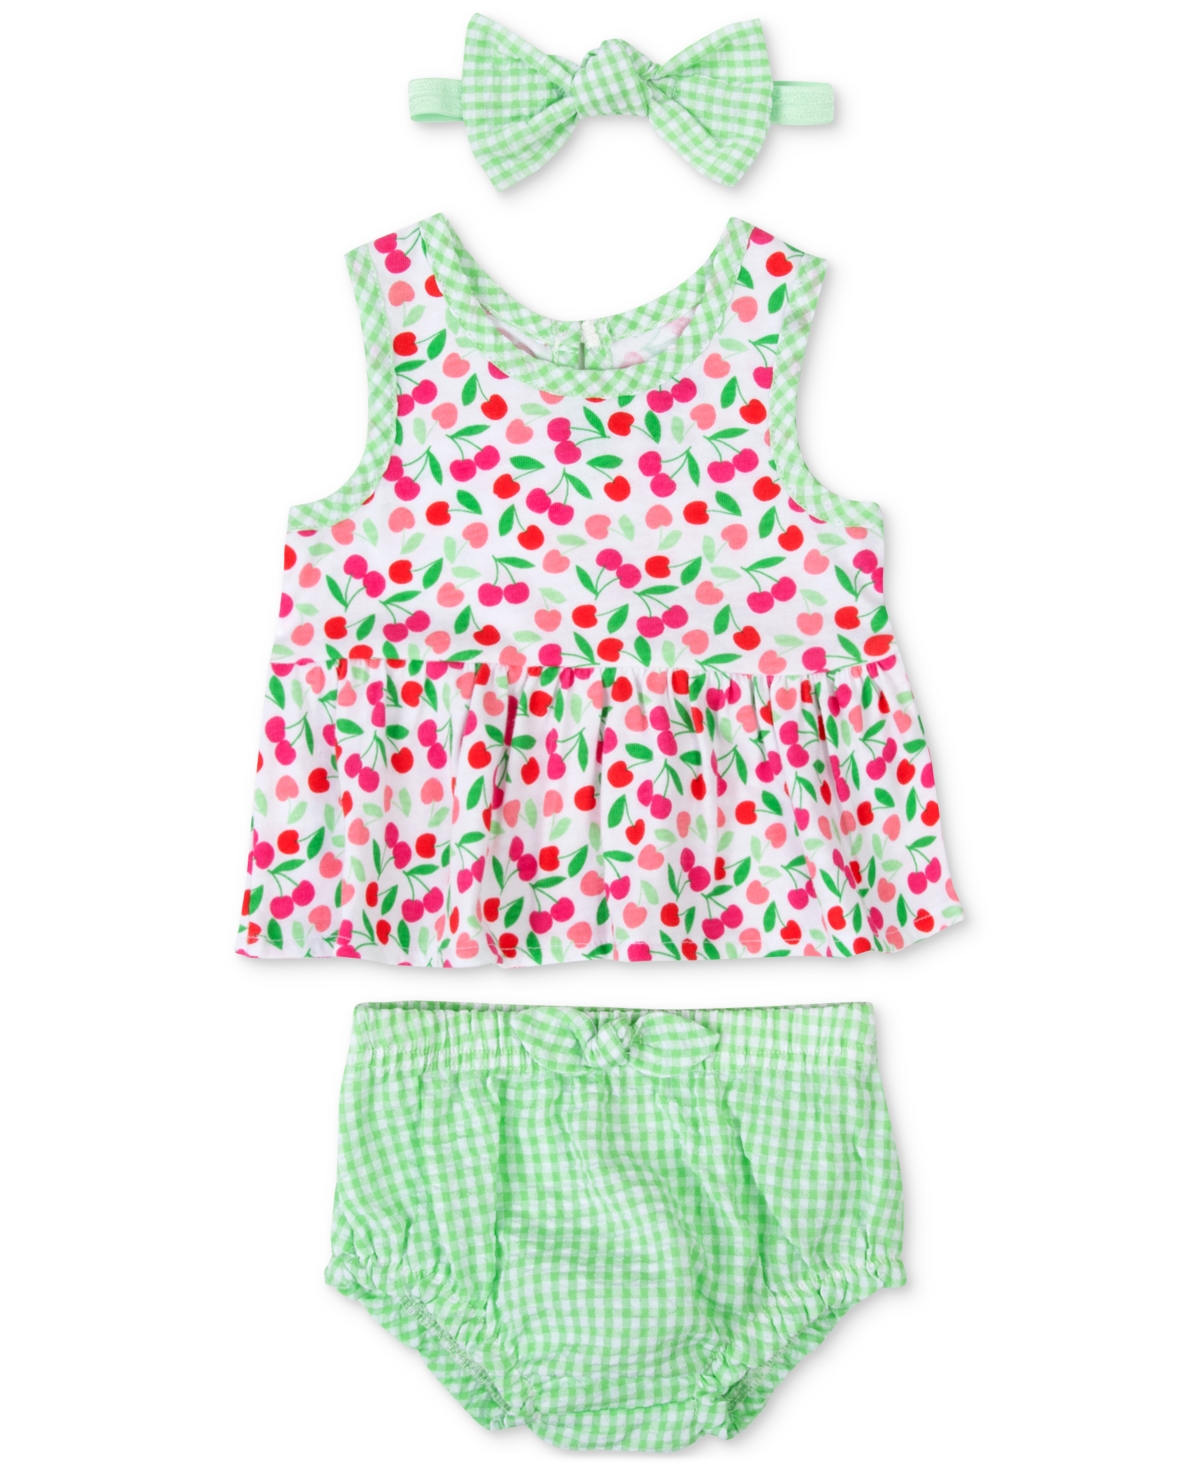 Baby Essentials Baby Girls Cherry-print Top, Bloomer And Headband, 3 Piece Set In Green